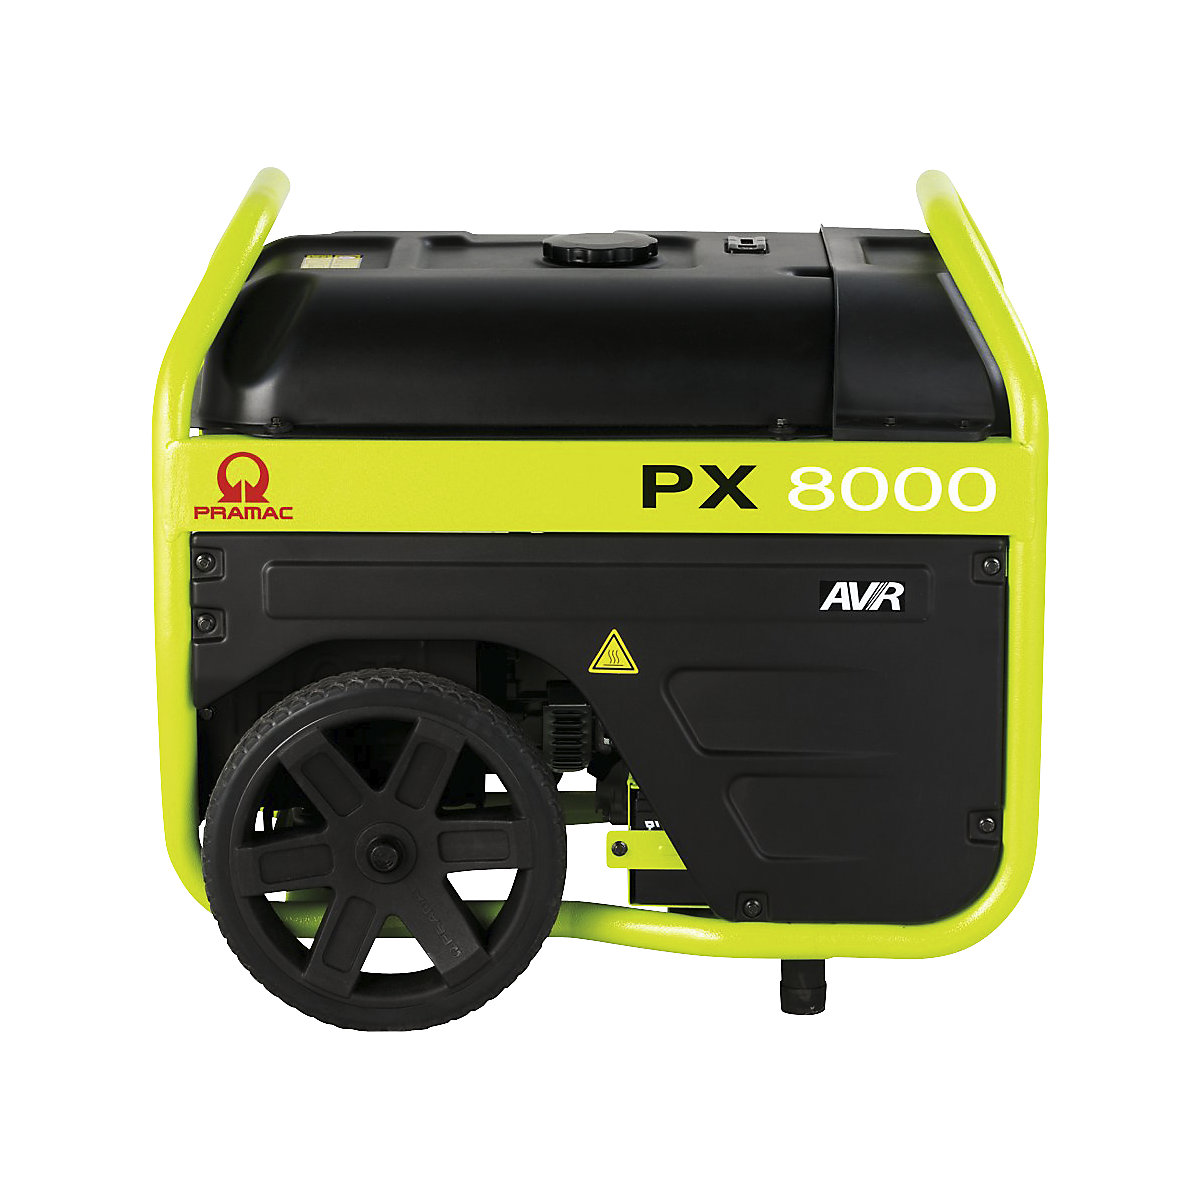 PX series power generator – Pramac